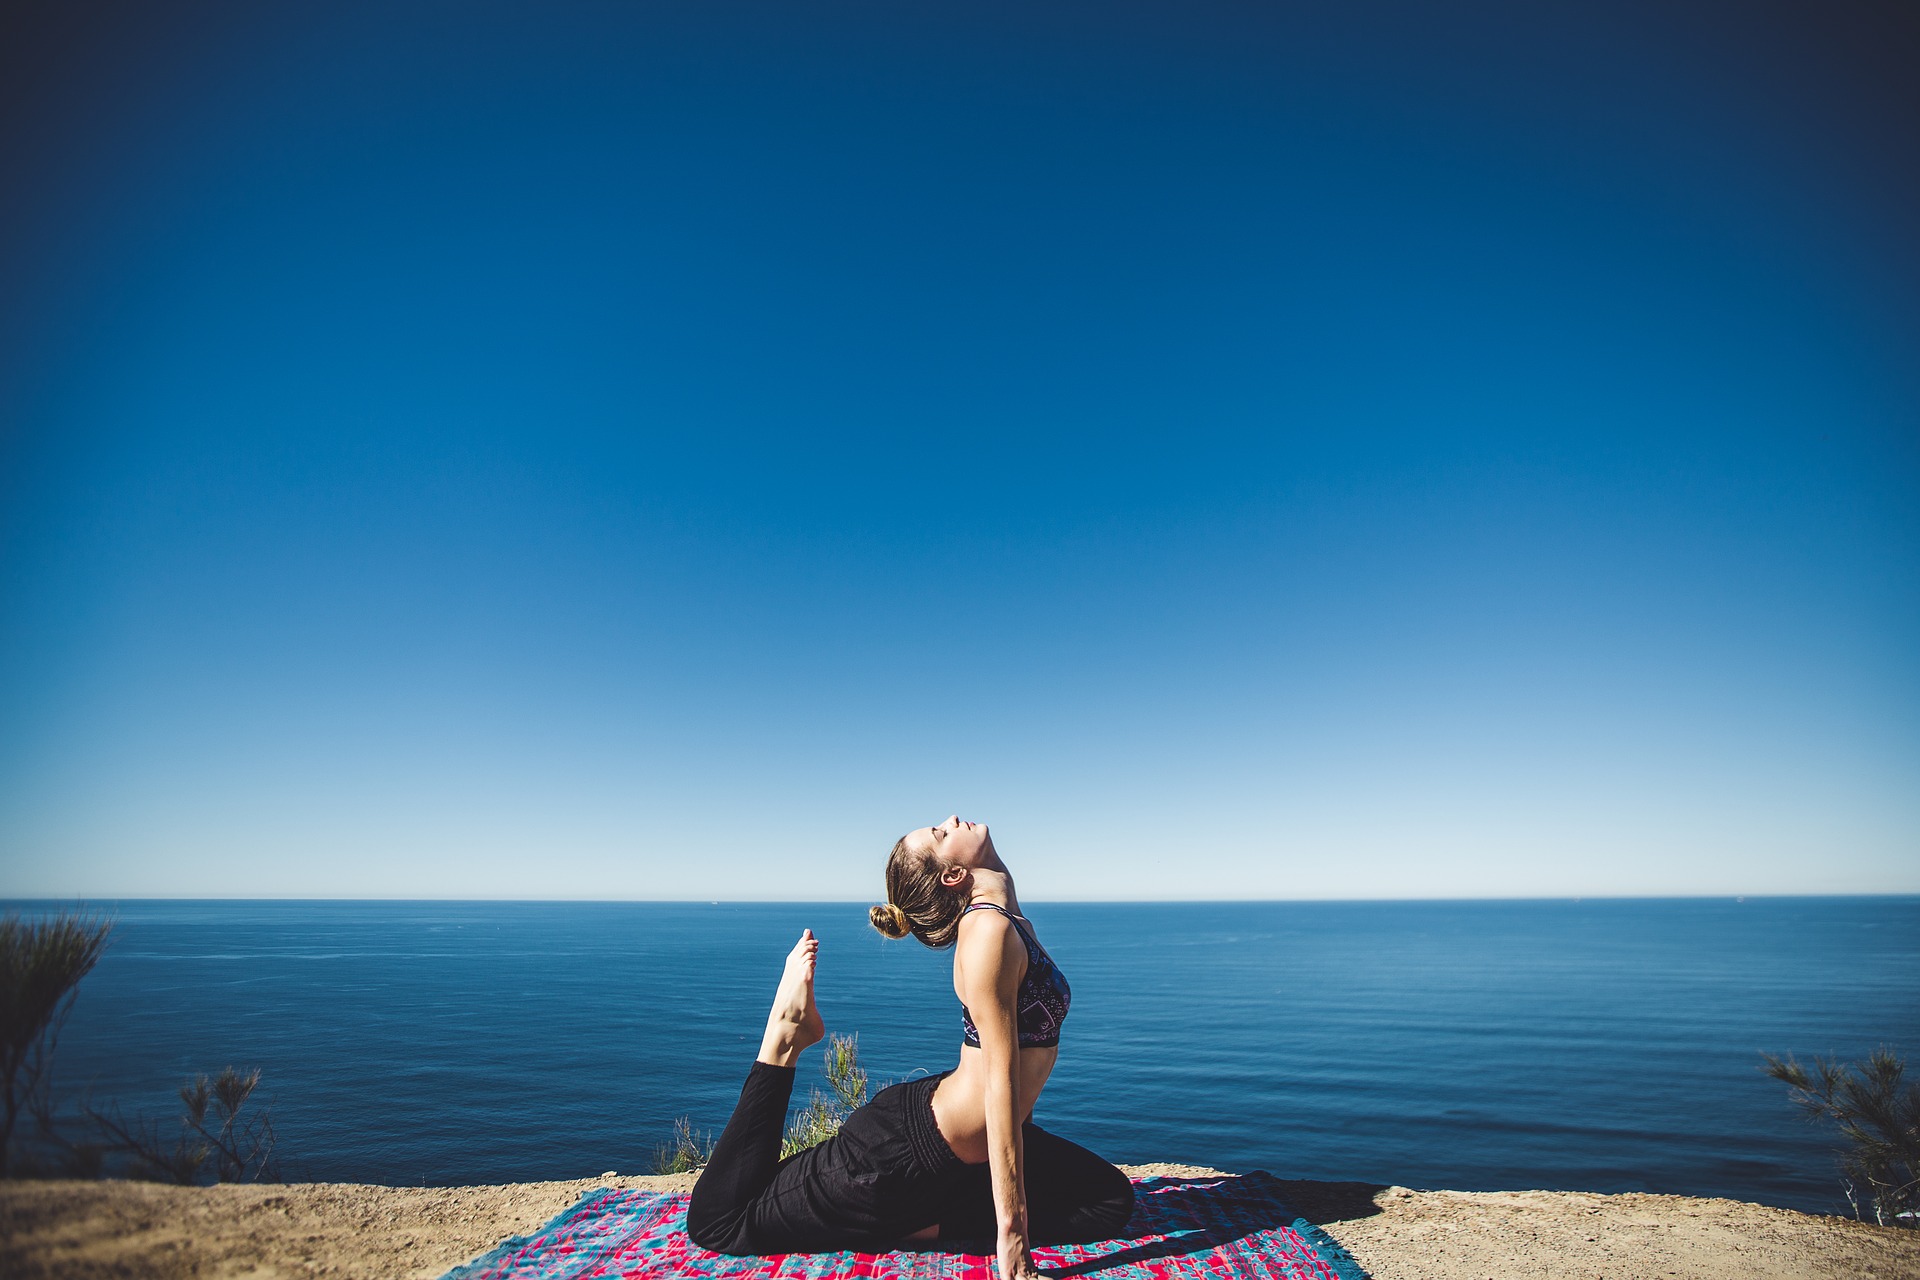 Descubre el yoga al aire libre en Tenerife